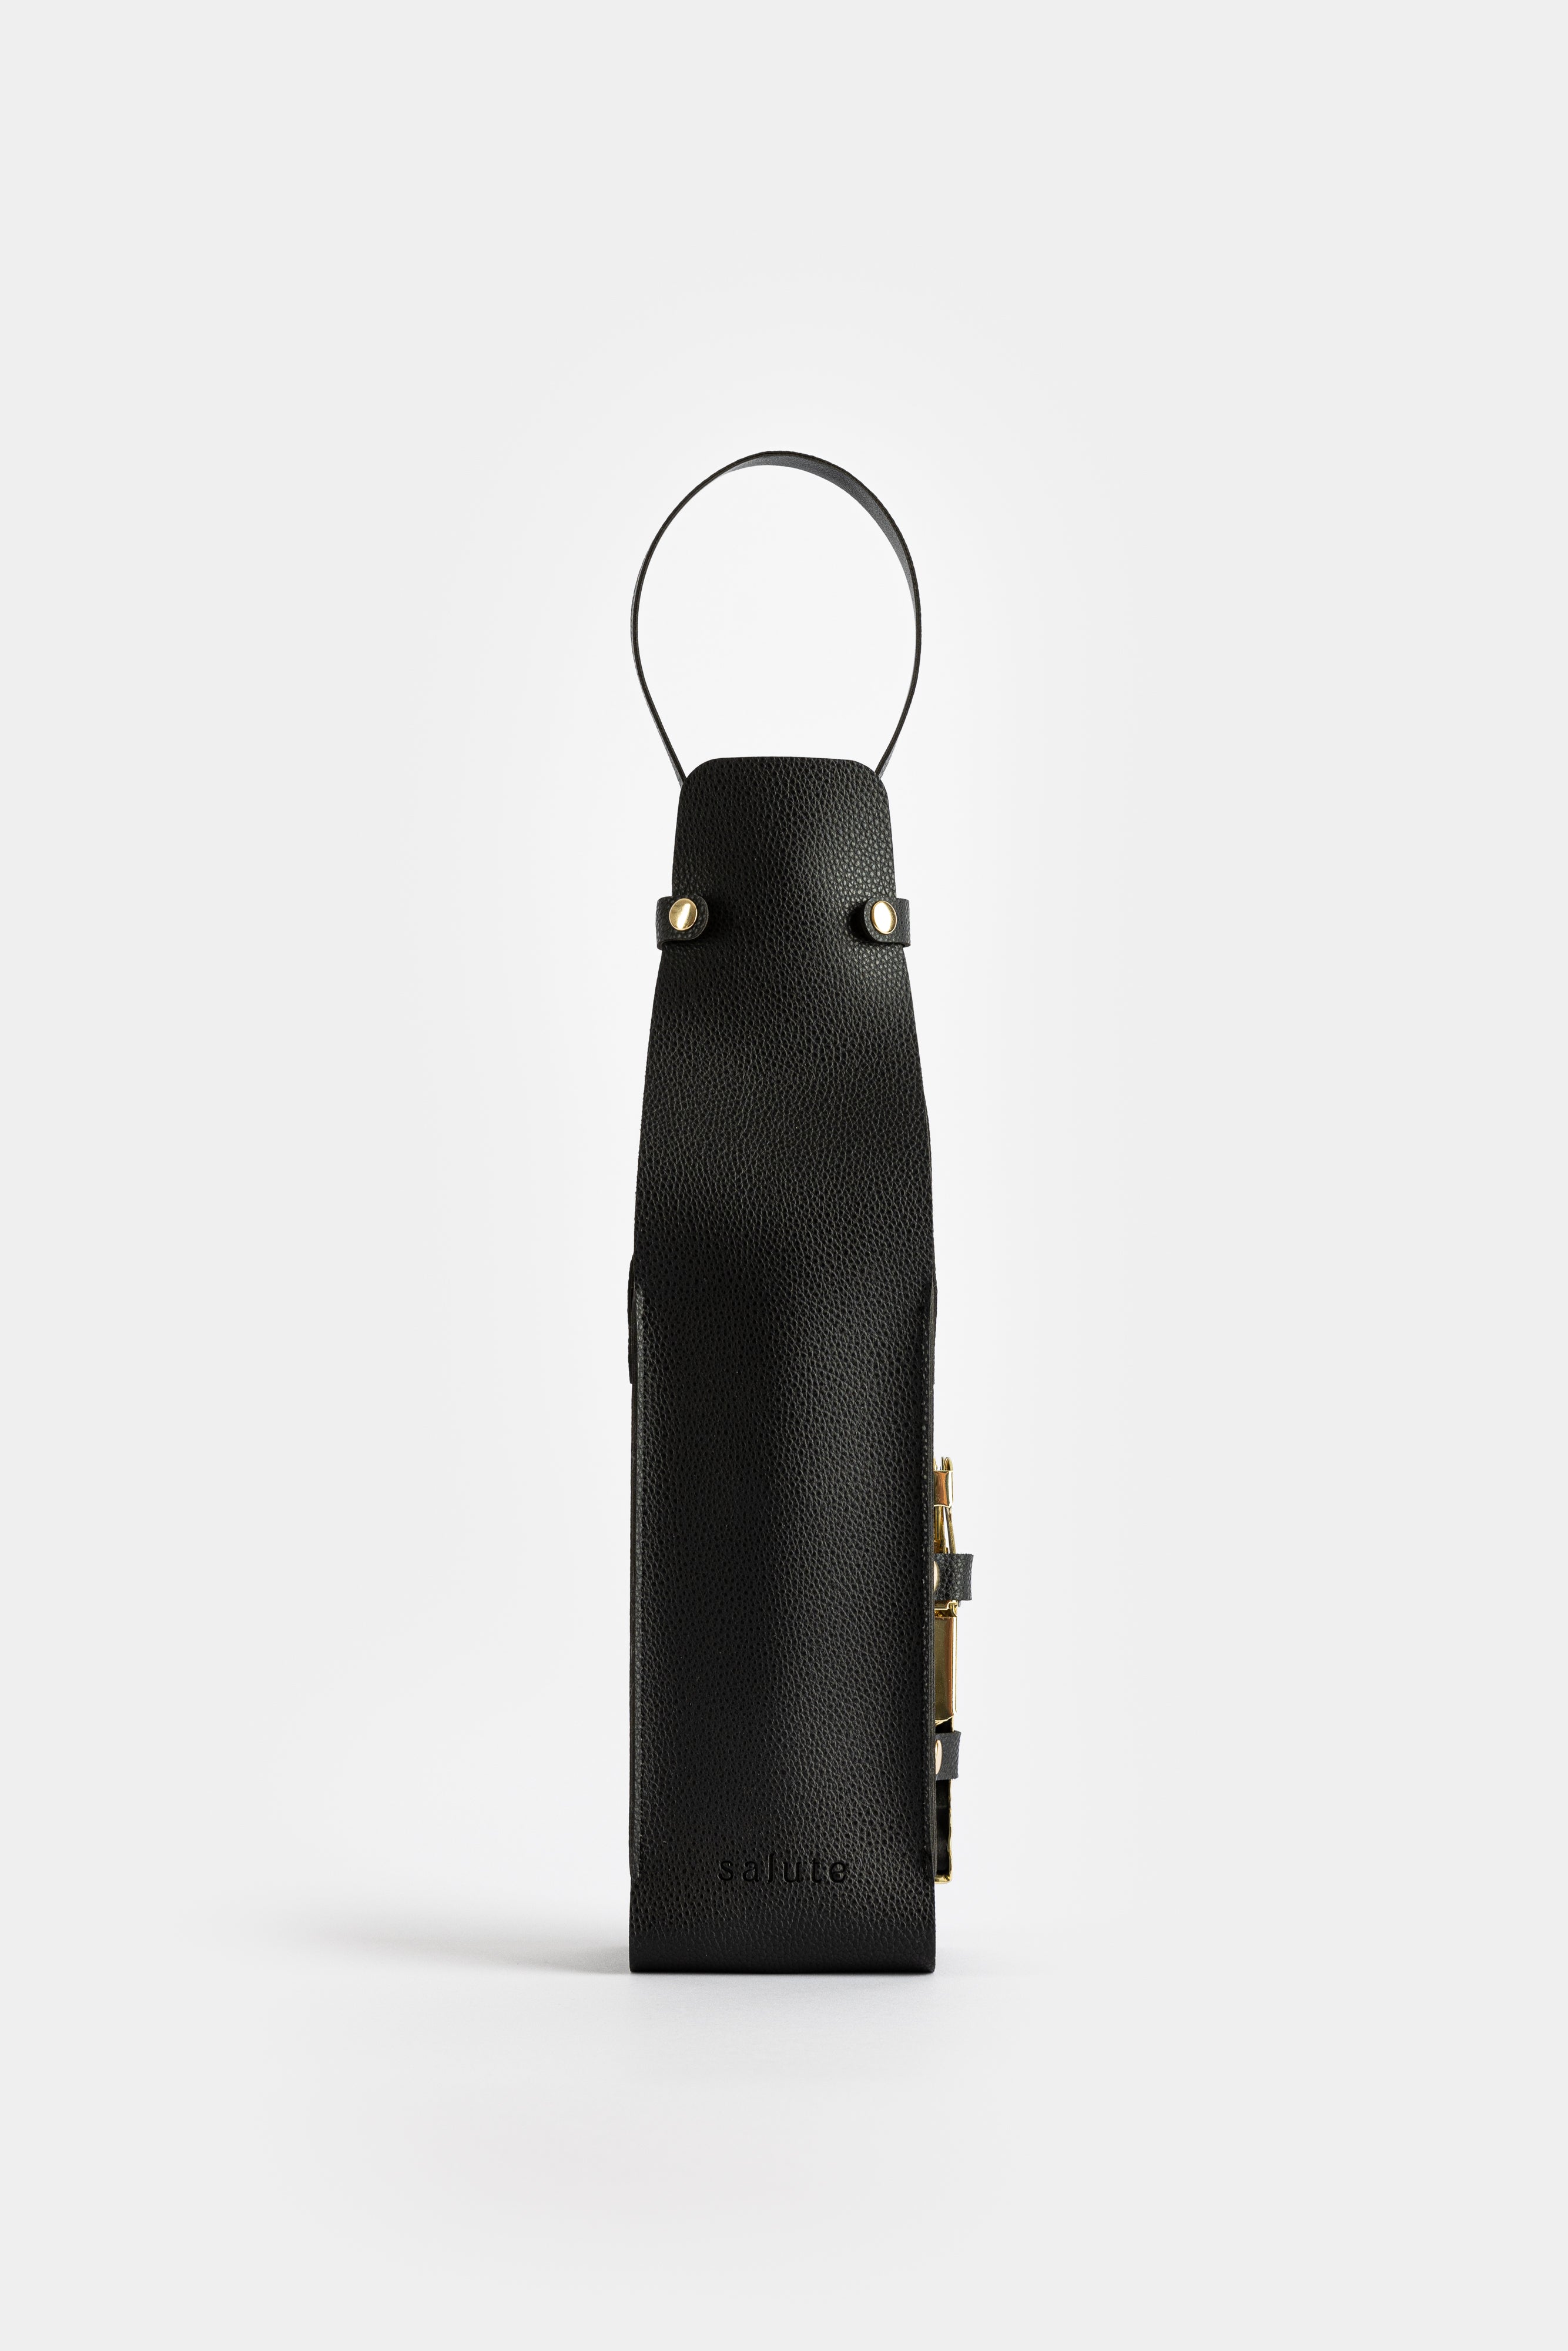 Wine Bottle Carrier with Corkscrew - Black – Salute